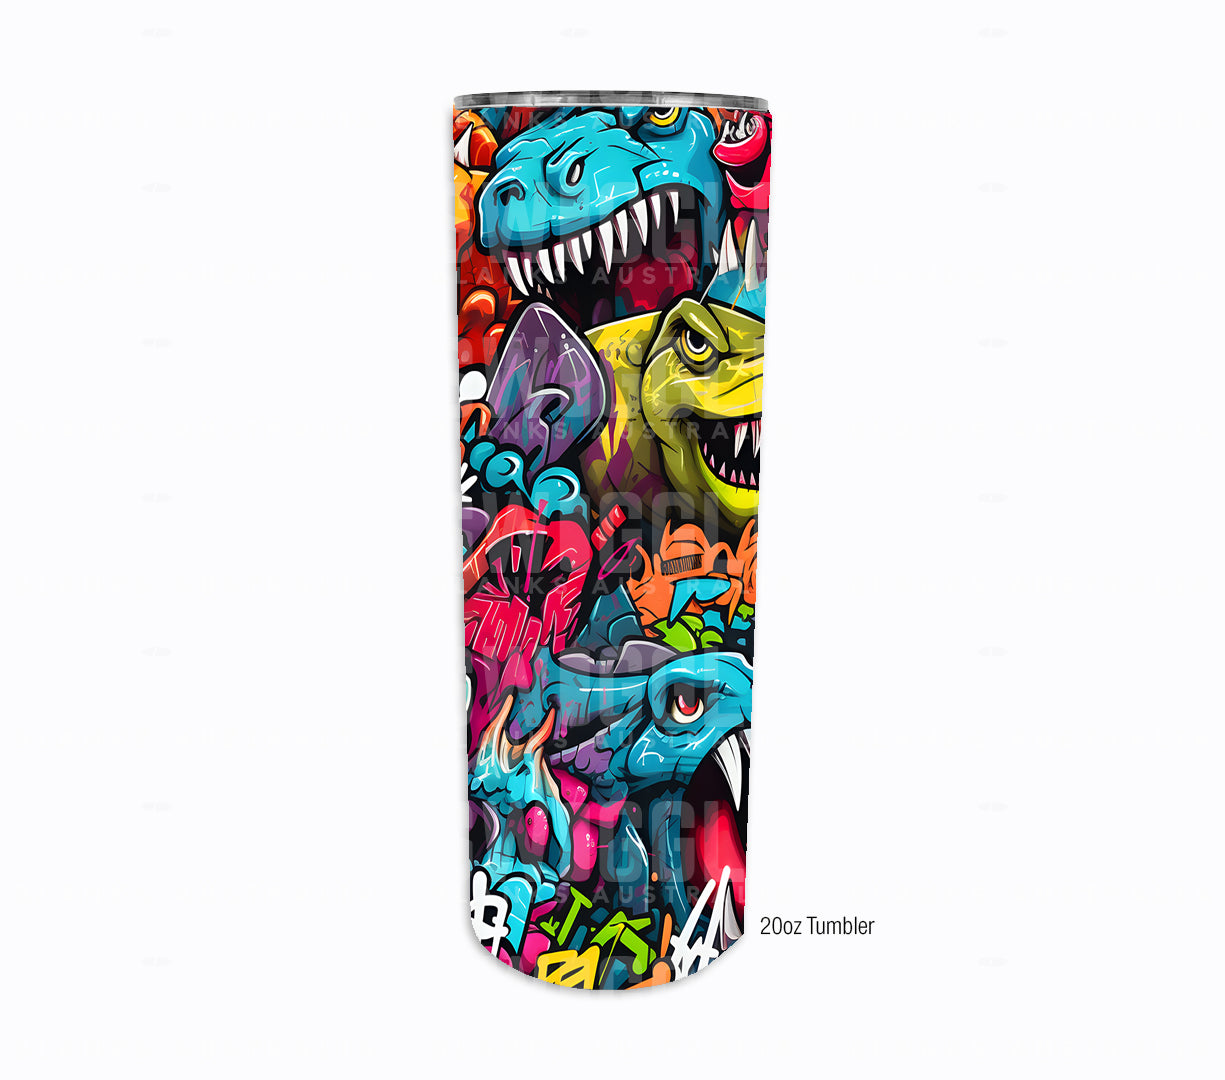 Dinosaur Graffiti Kids #6 - Digital Download - Assorted Bottle Sizes